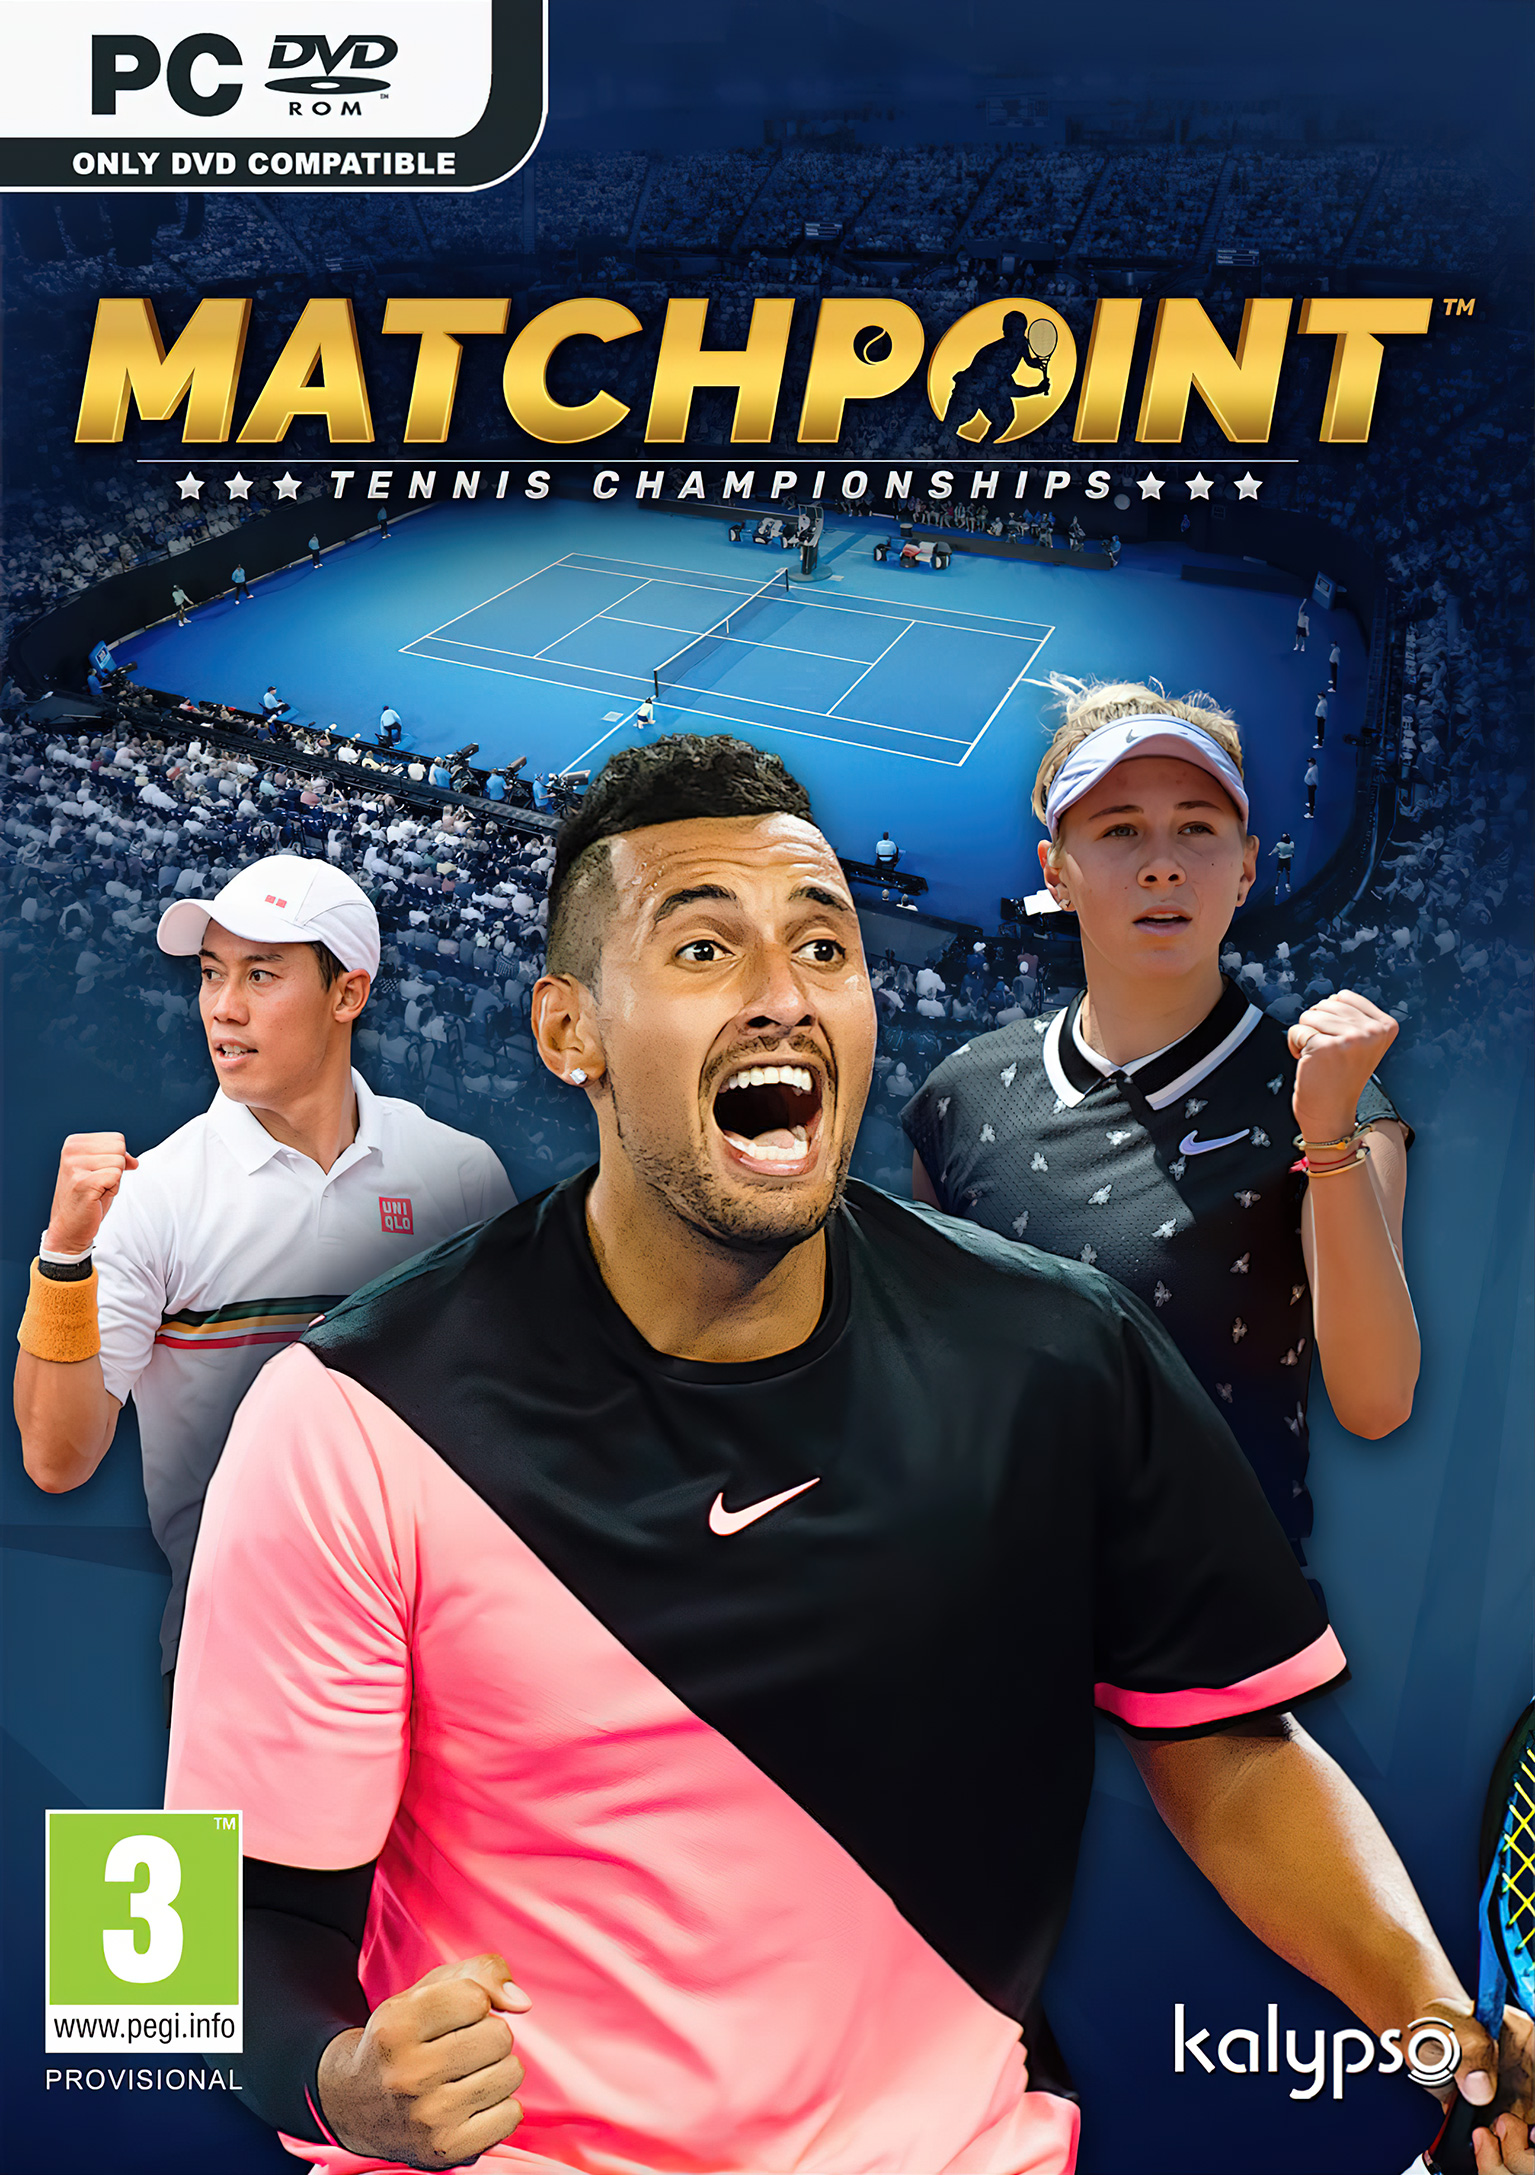 Matchpoint - Tennis Championships - predný DVD obal